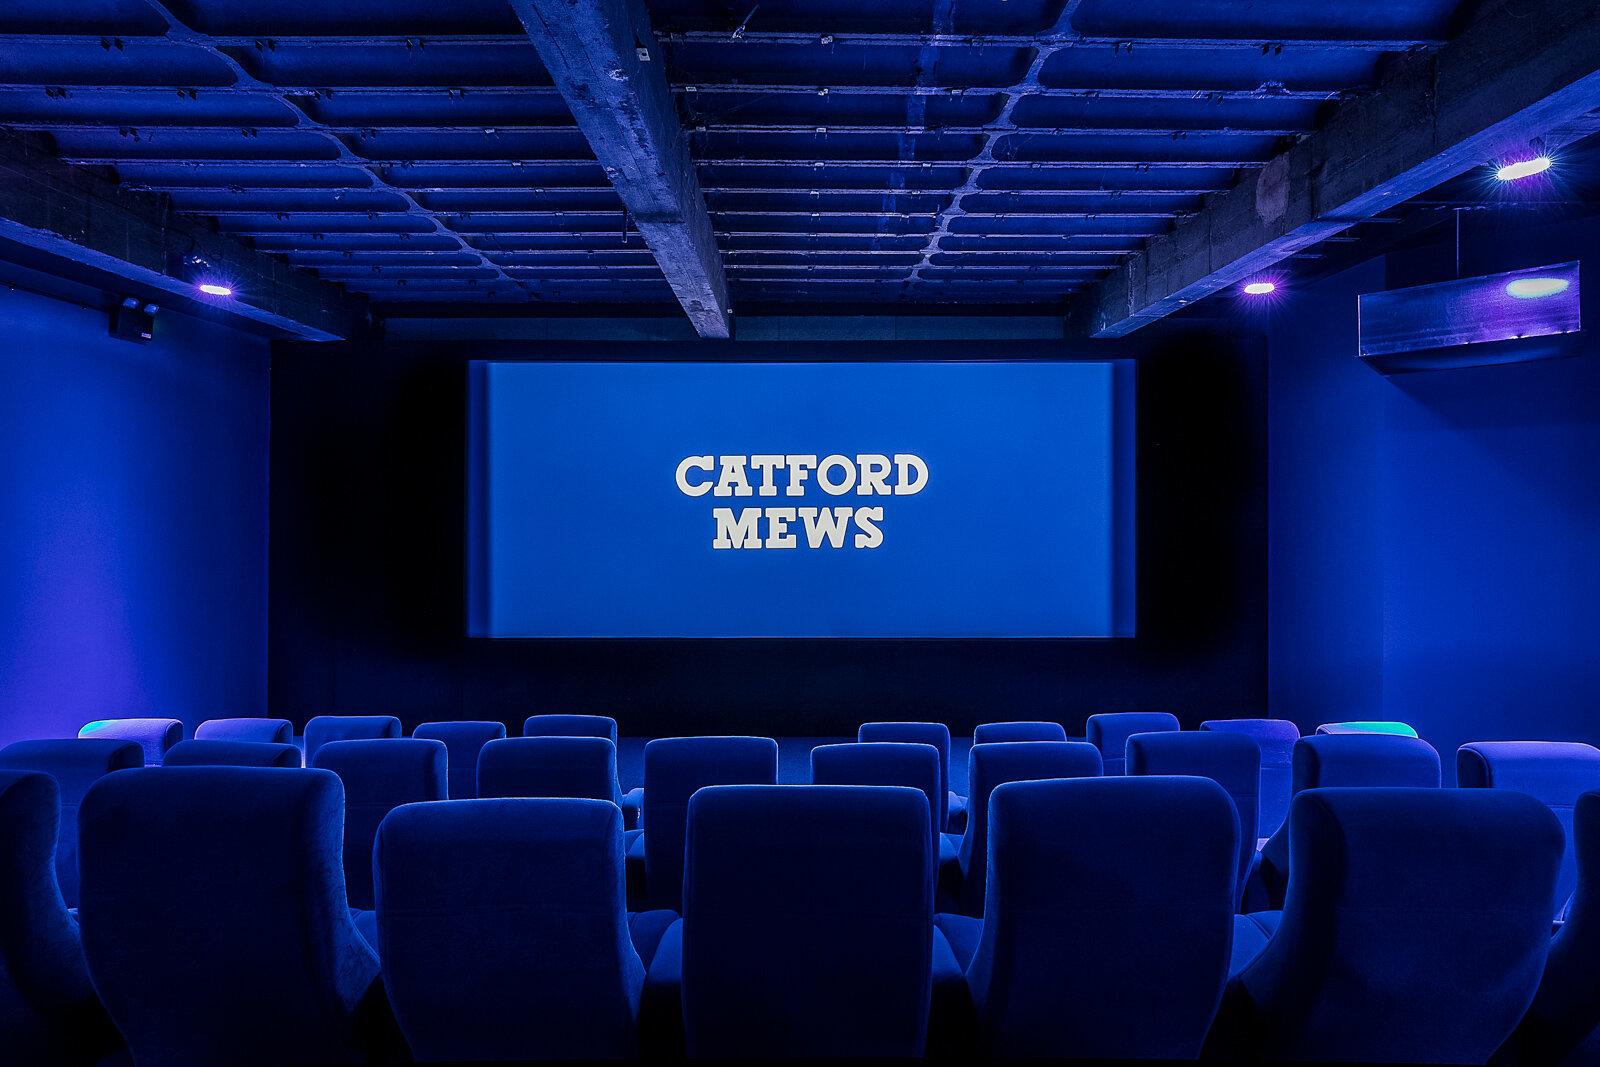 Catford Mews, Cinema Screens photo #1